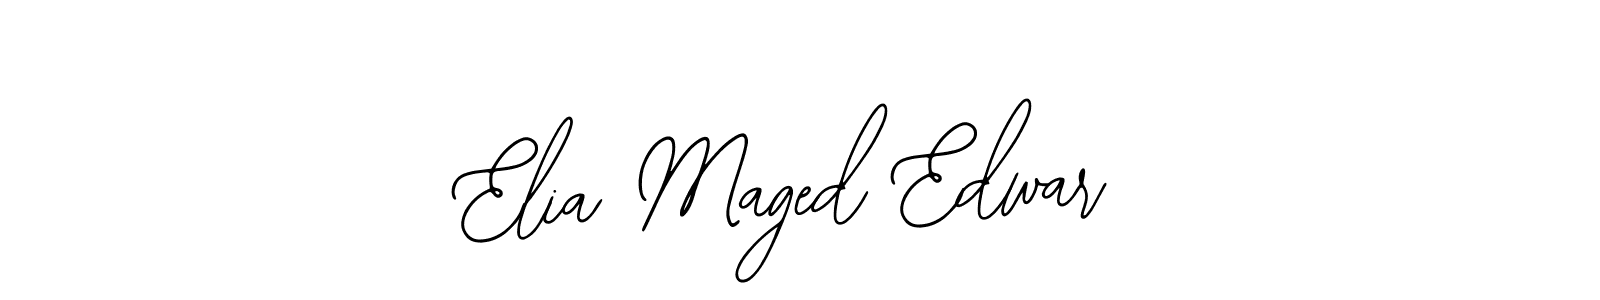 How to make Elia Maged Edwar signature? Bearetta-2O07w is a professional autograph style. Create handwritten signature for Elia Maged Edwar name. Elia Maged Edwar signature style 12 images and pictures png